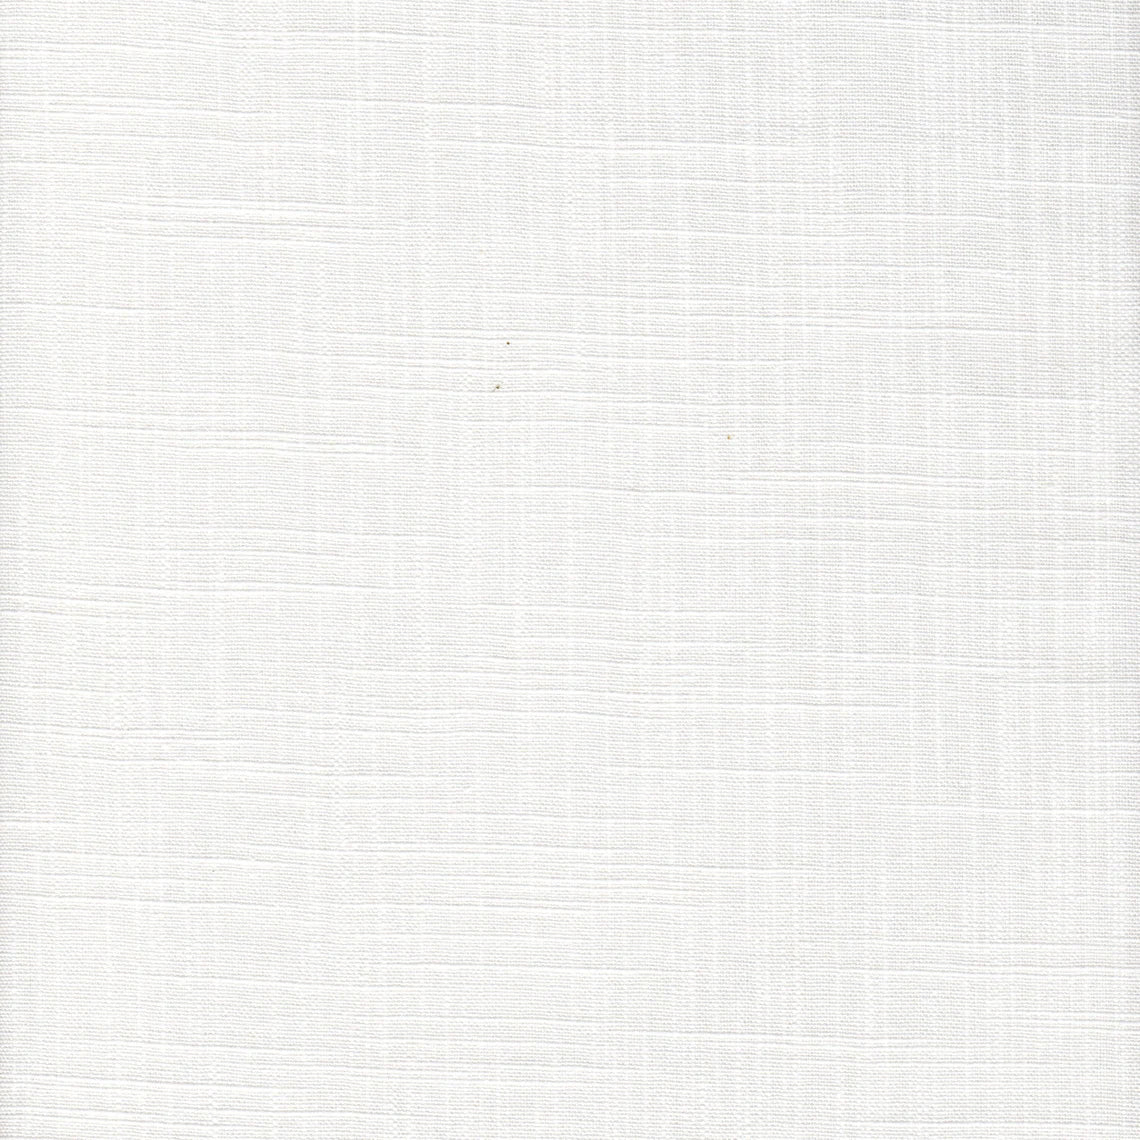 Duvet Cover in Modern Farmhouse Solid White Cotton Slub Canvas